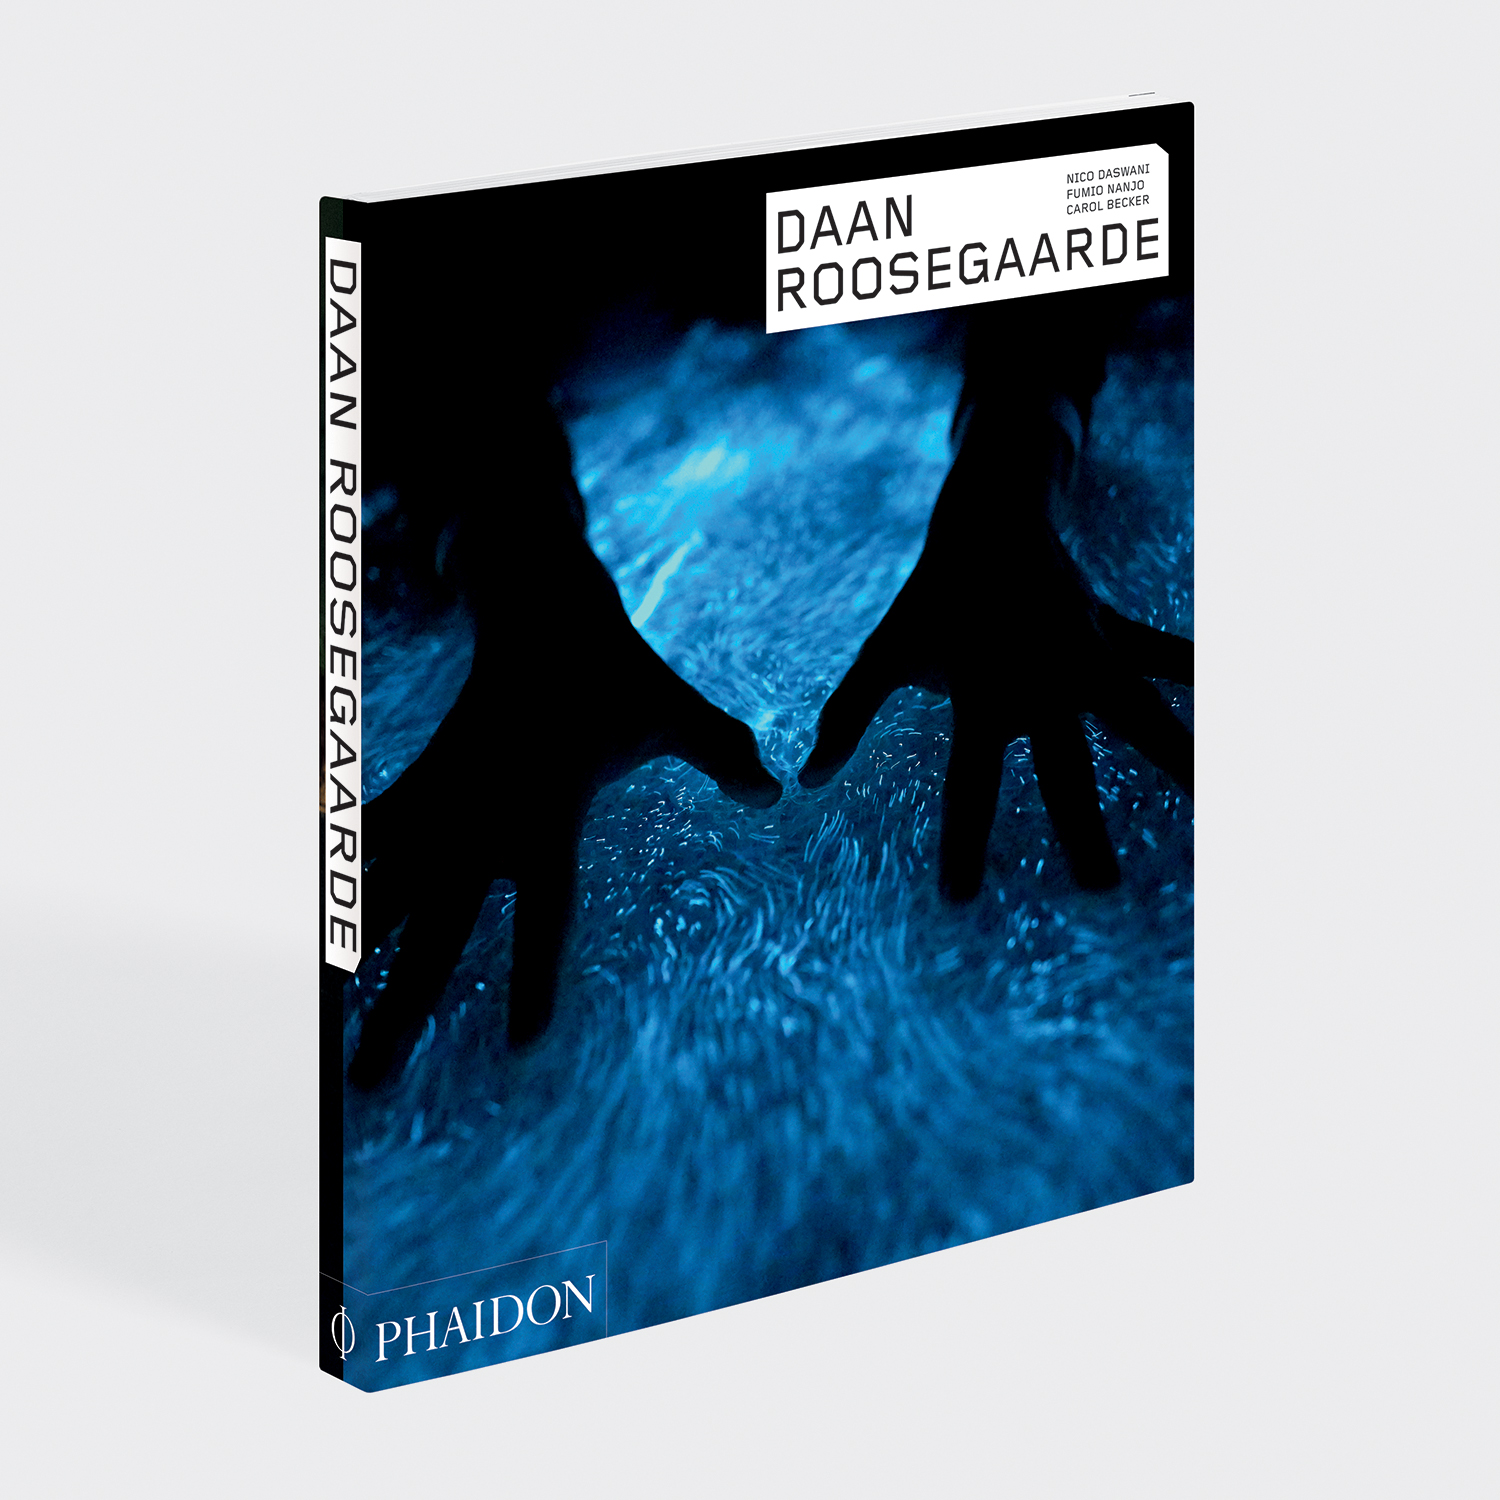 Our Daan Roosegaarde Contemporary Artist Series book